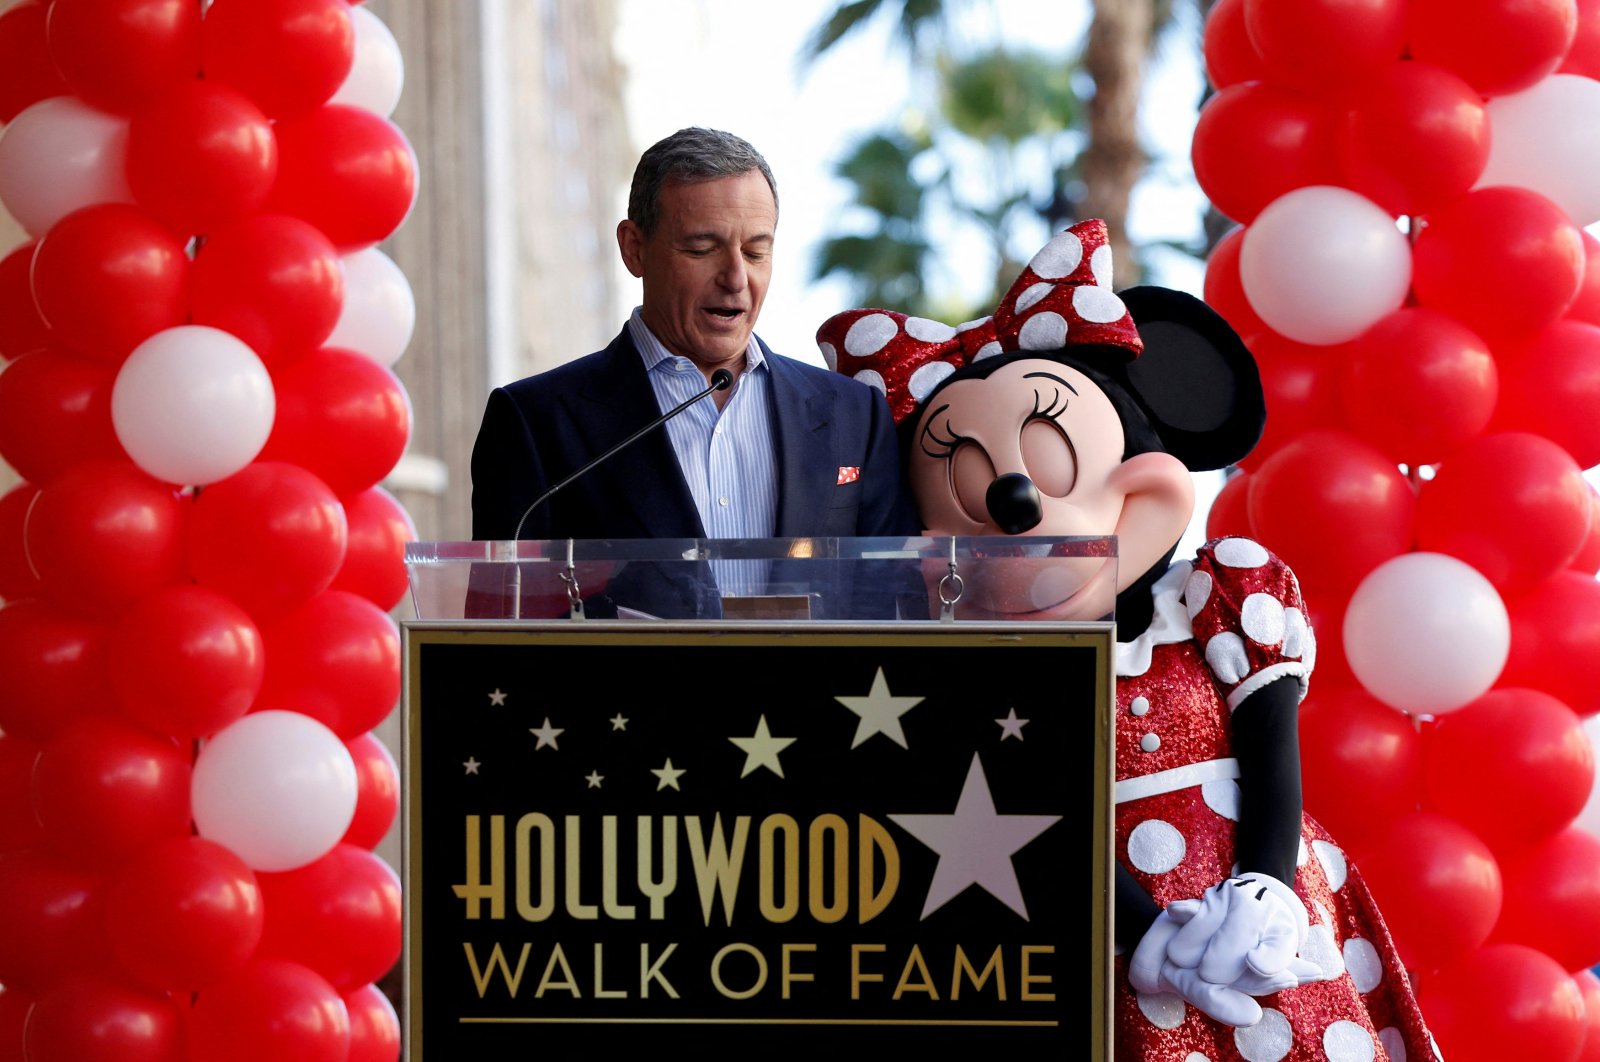 Disney membawa kembali Bob Iger sebagai CEO dalam upaya untuk mendorong pertumbuhan